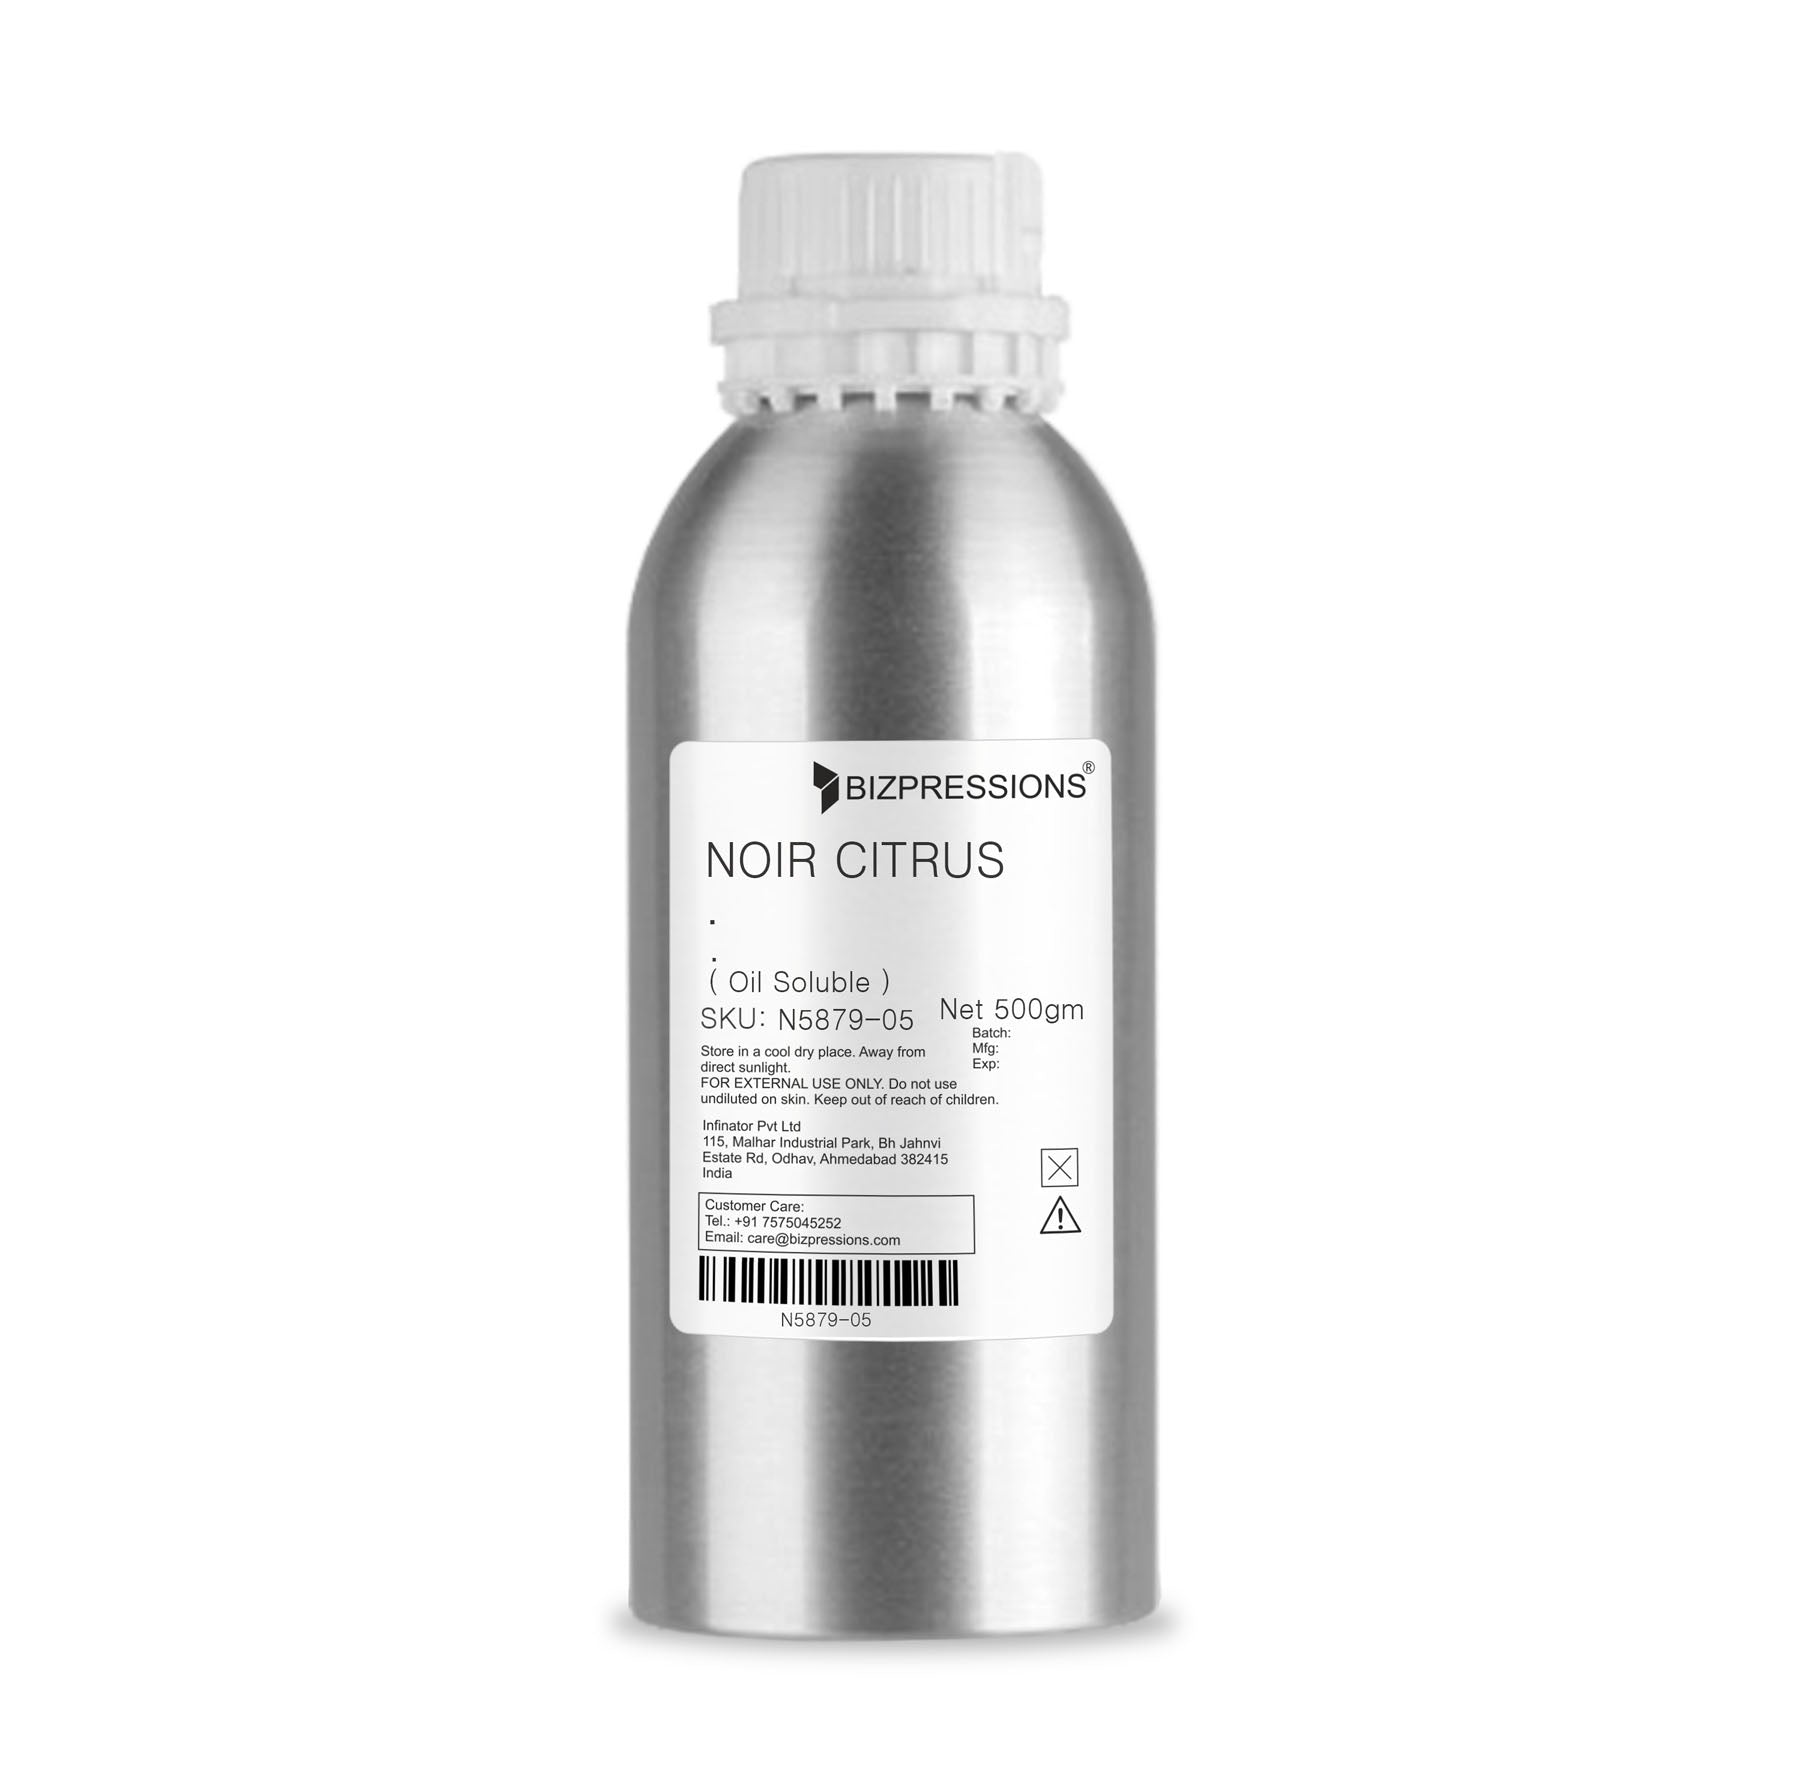 NOIR CITRUS - Fragrance ( Oil Soluble ) - 500 gm